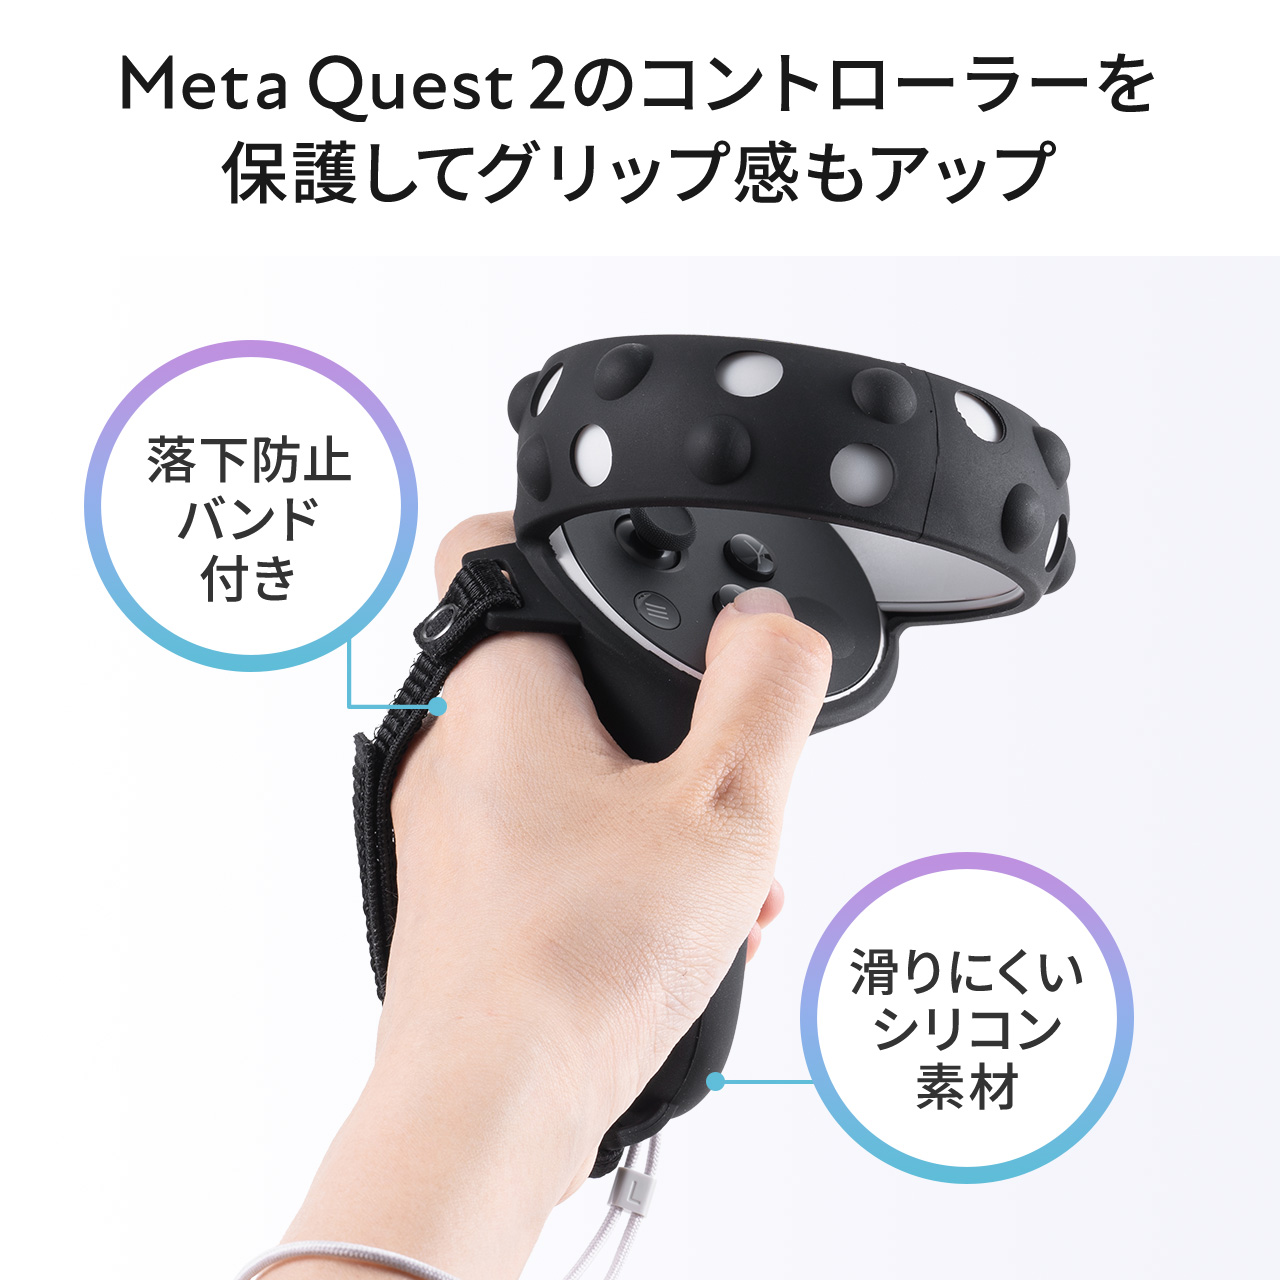 Meta Quest 2 Oculus Quest 2 用シェルカバー シリコン 簡単装着シリコンコントローラーカバー シリコン 落下防止バンド付き 400-MEDIQ2C002